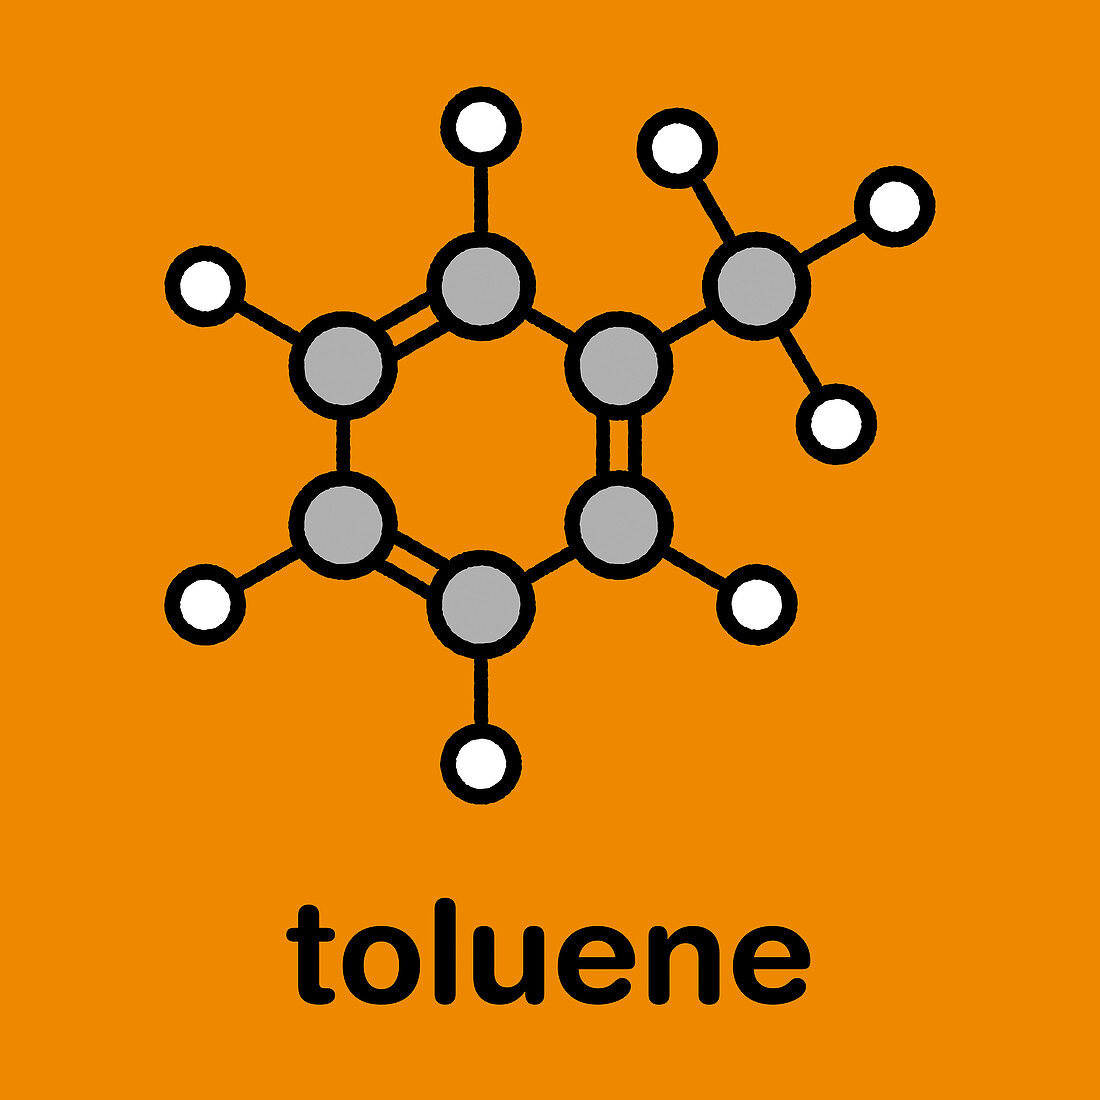 Toluene chemical solvent molecule